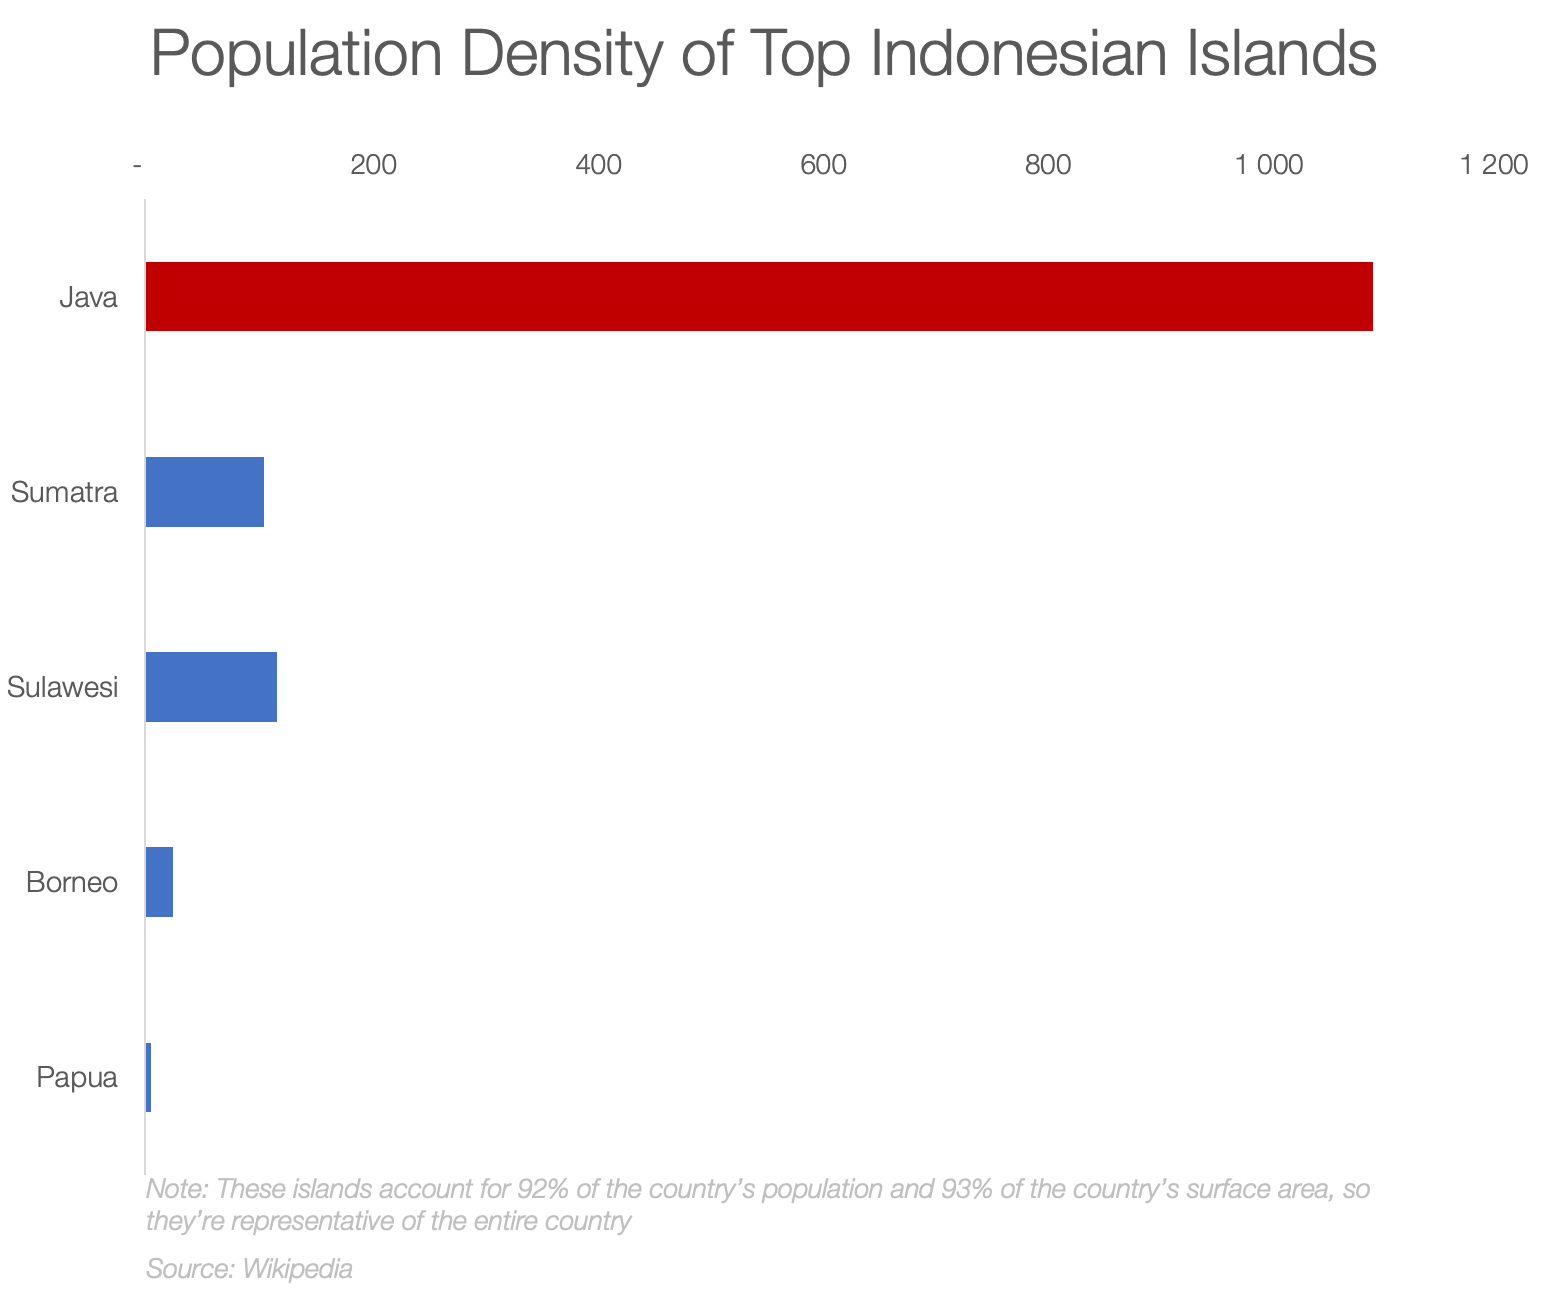 Urban population on Java Island, 2005. Source: CBS, 2005 [14].